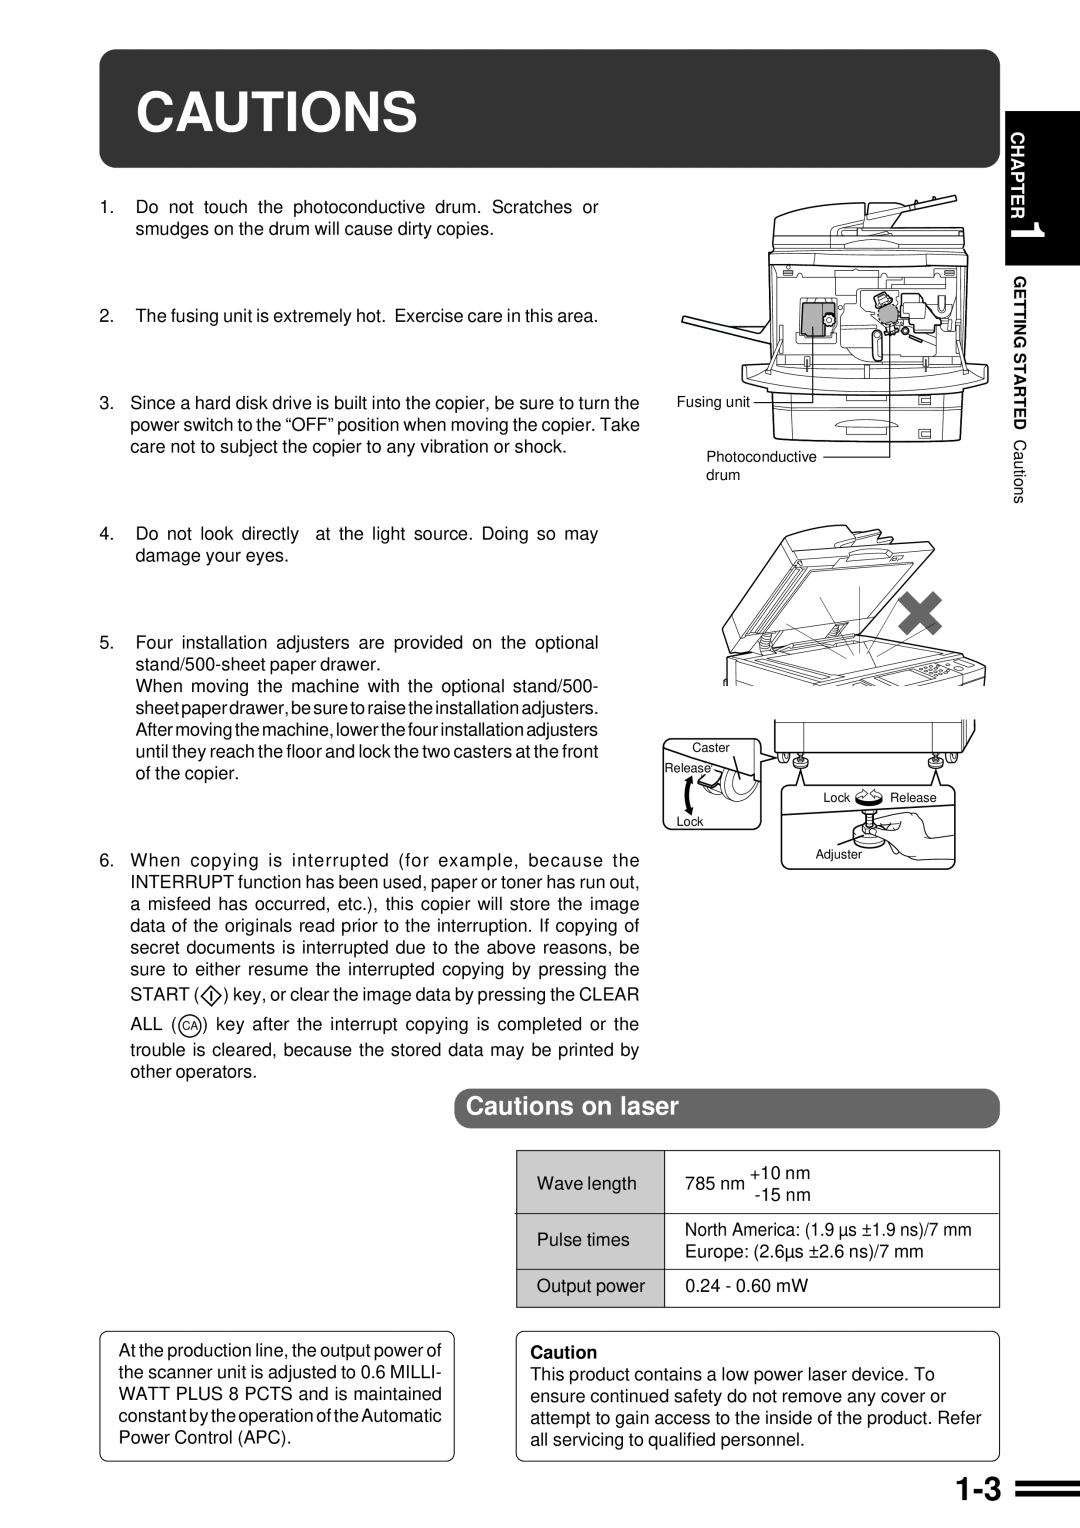 Sharp AR-507 operation manual Cautions on laser 